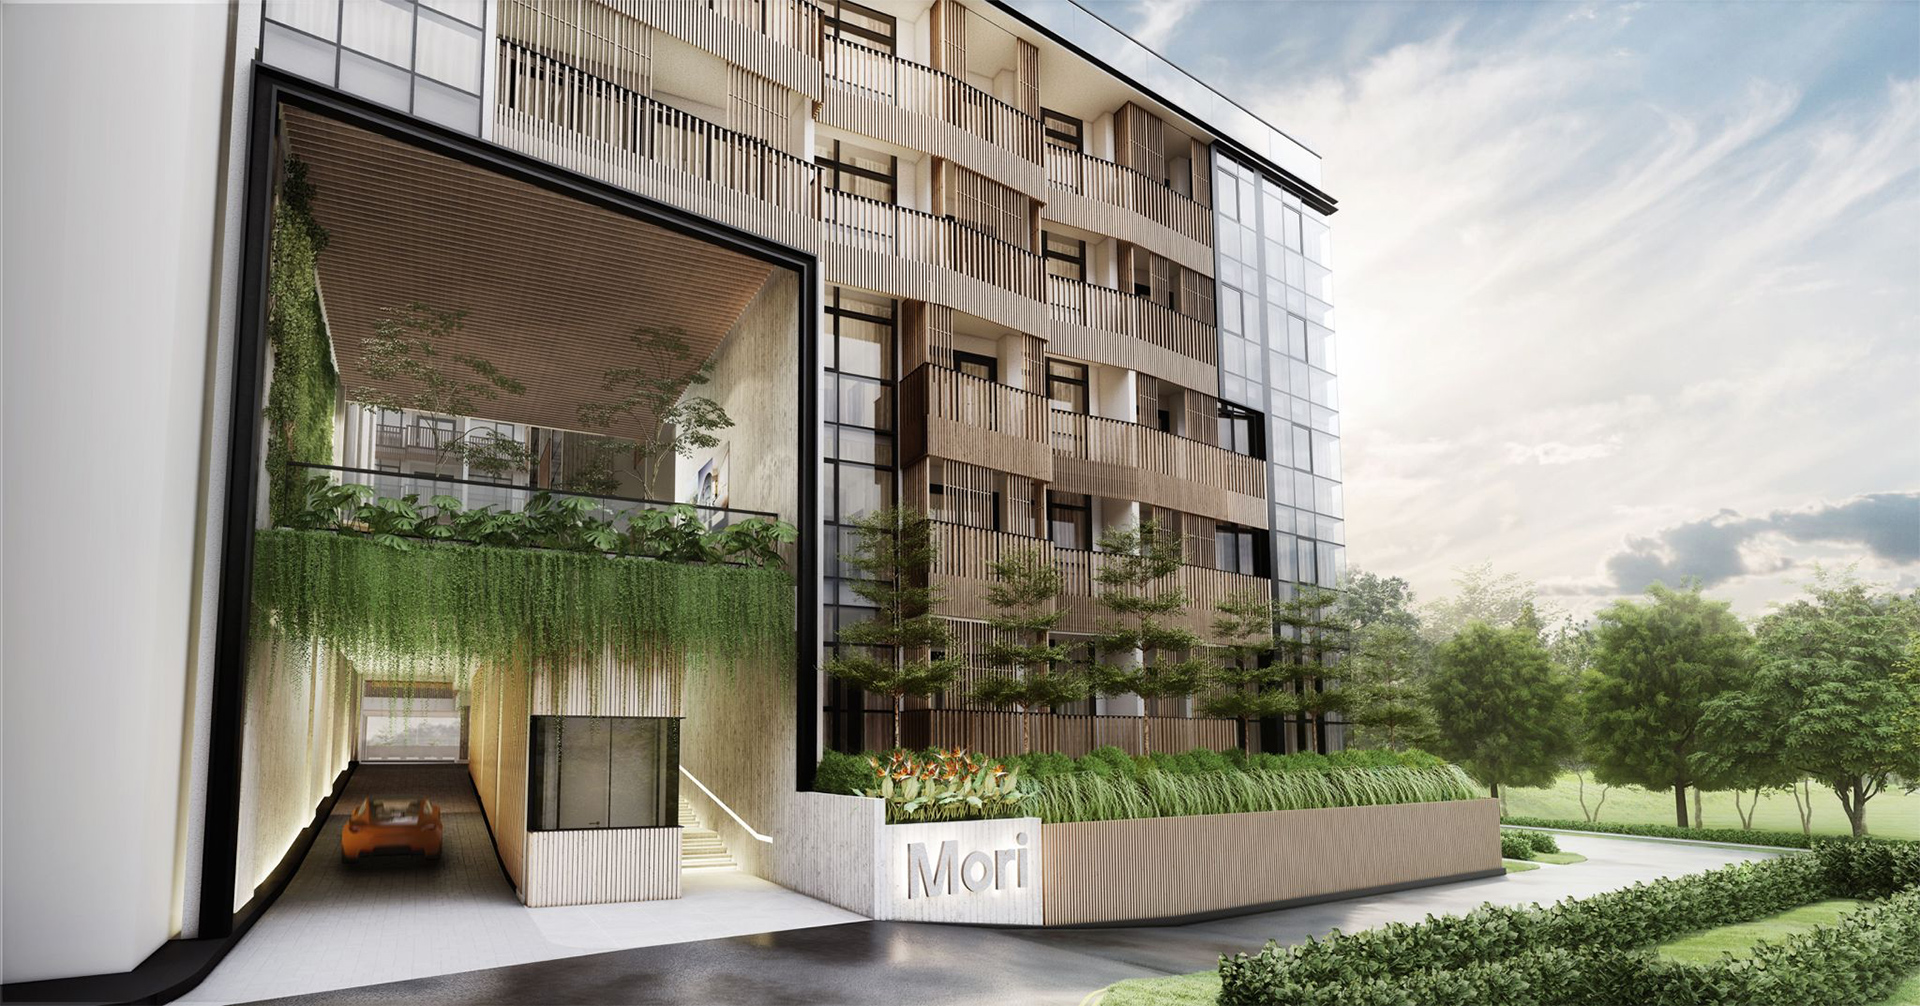 Mori Condo: Exclusive Properties for investors at a convenient location along Guillemard Road